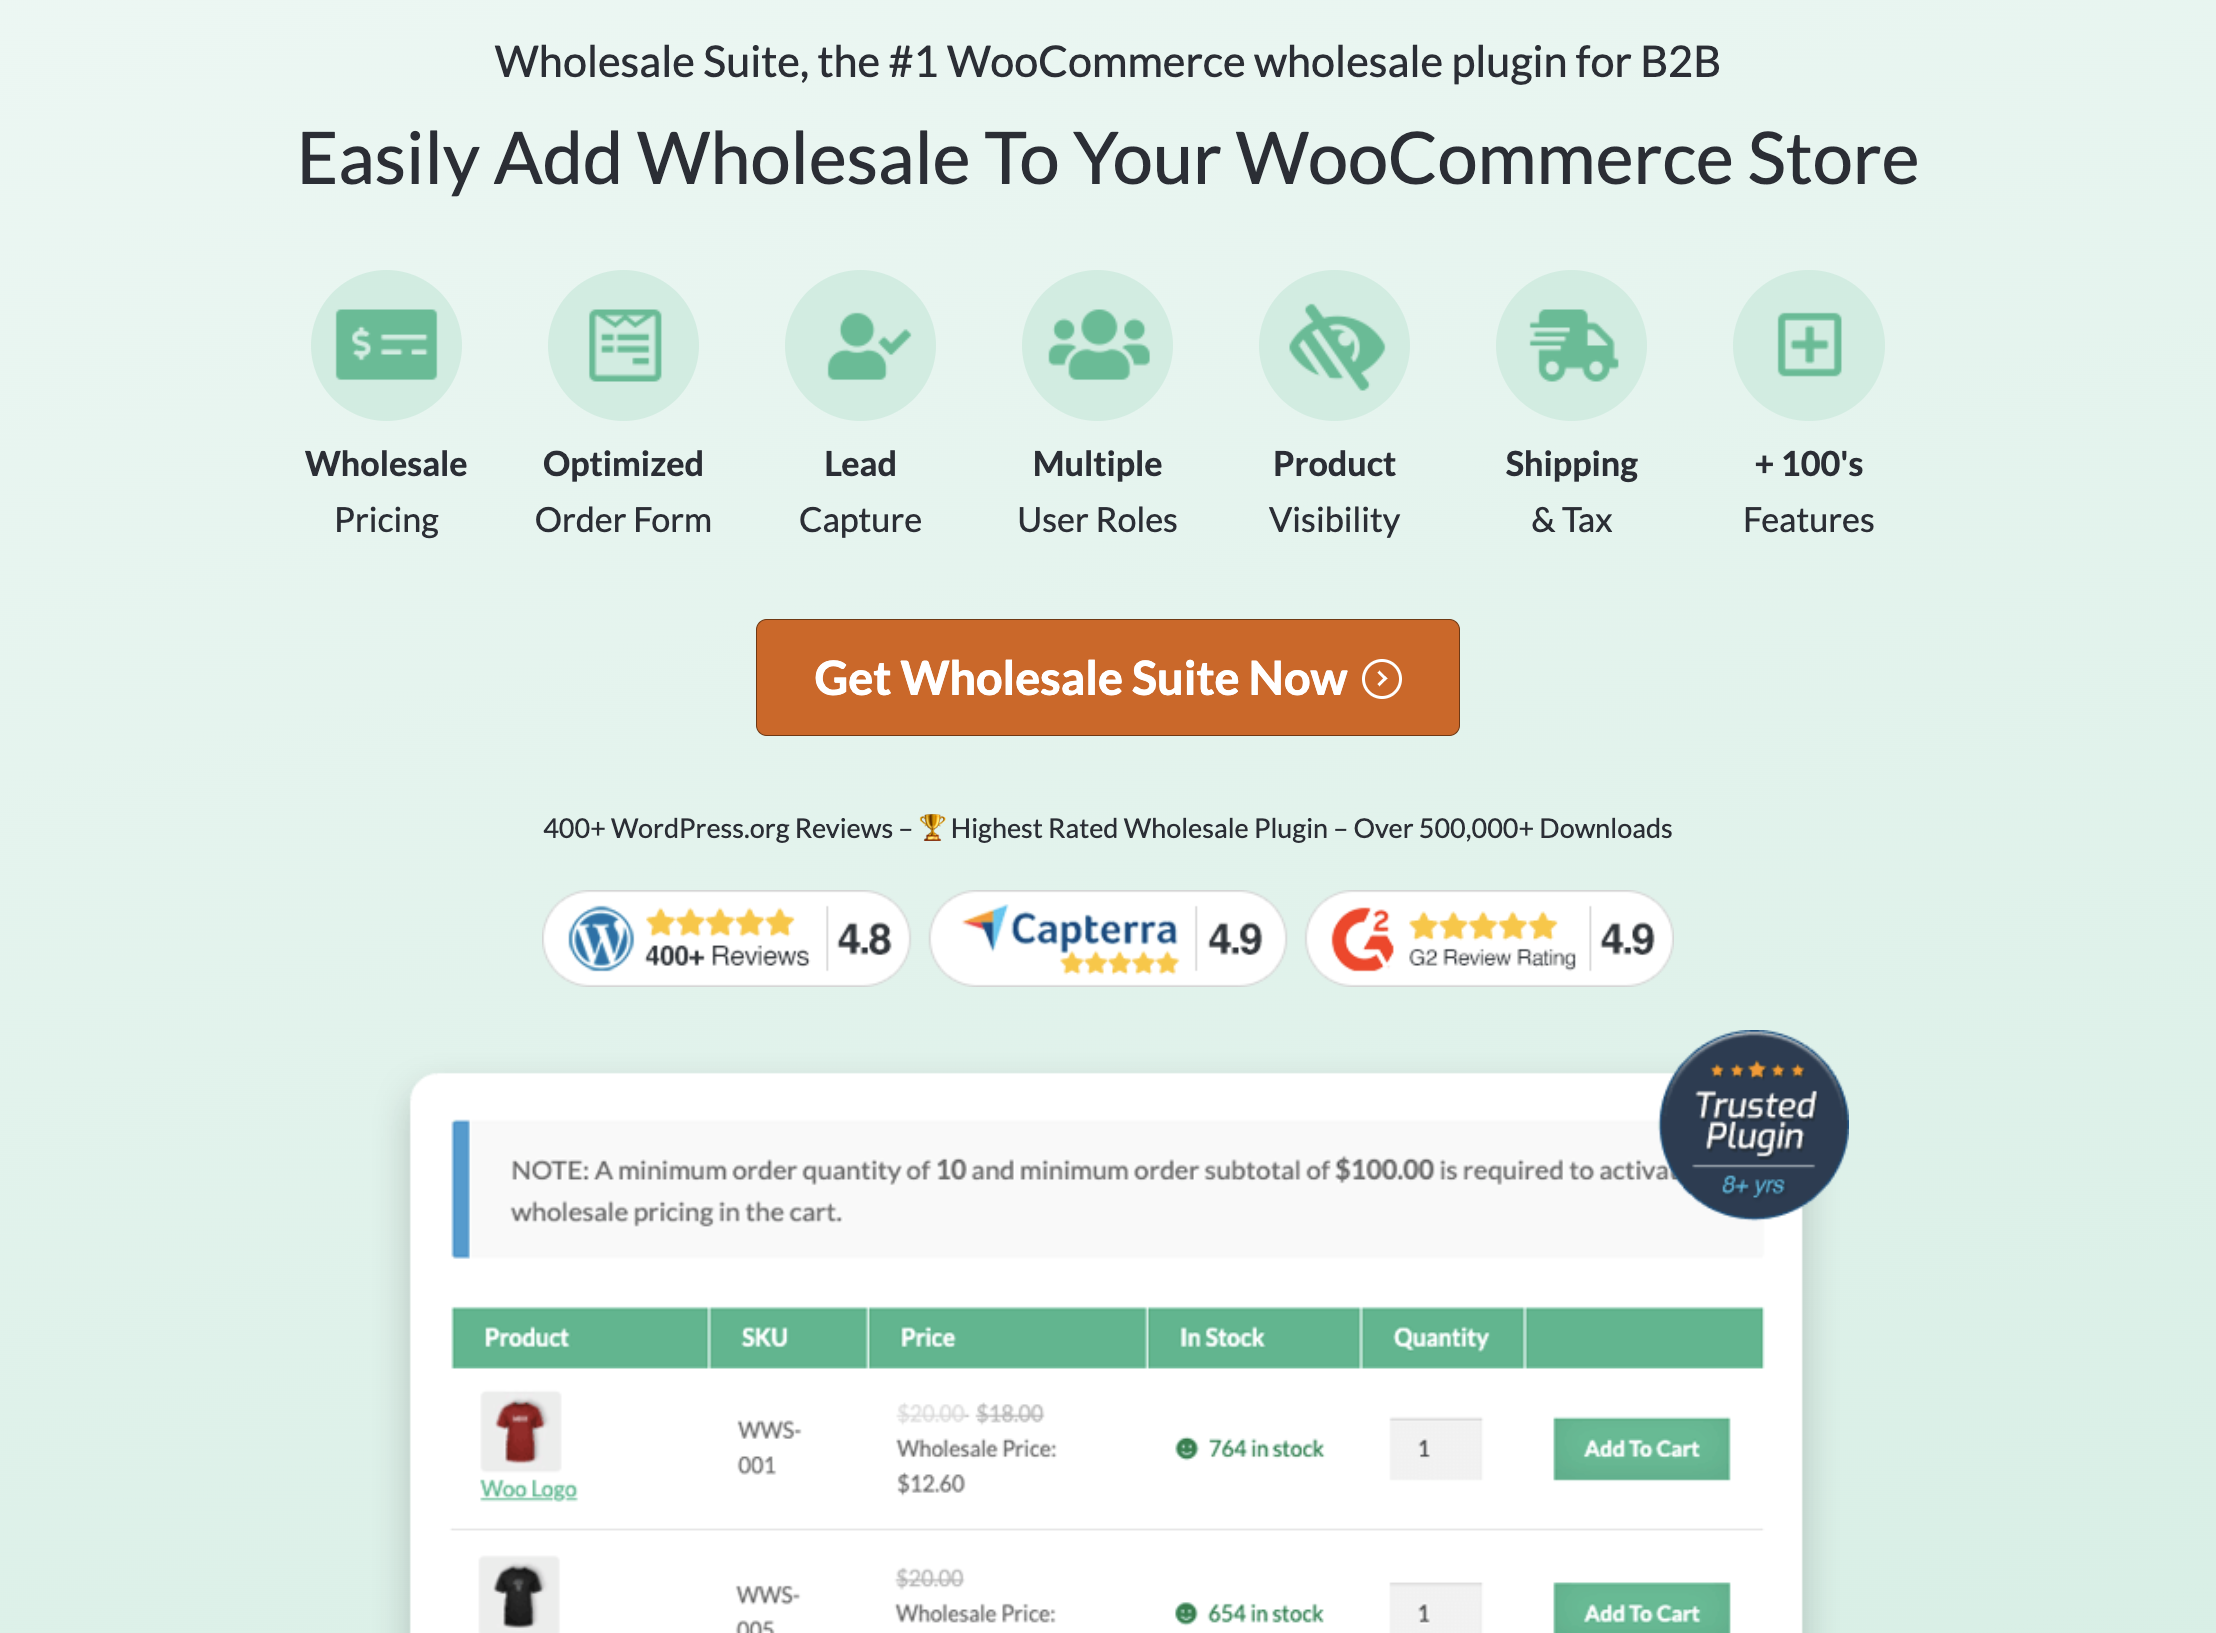 Wholesale Suite is the best wholesale plugin in WooCommerce